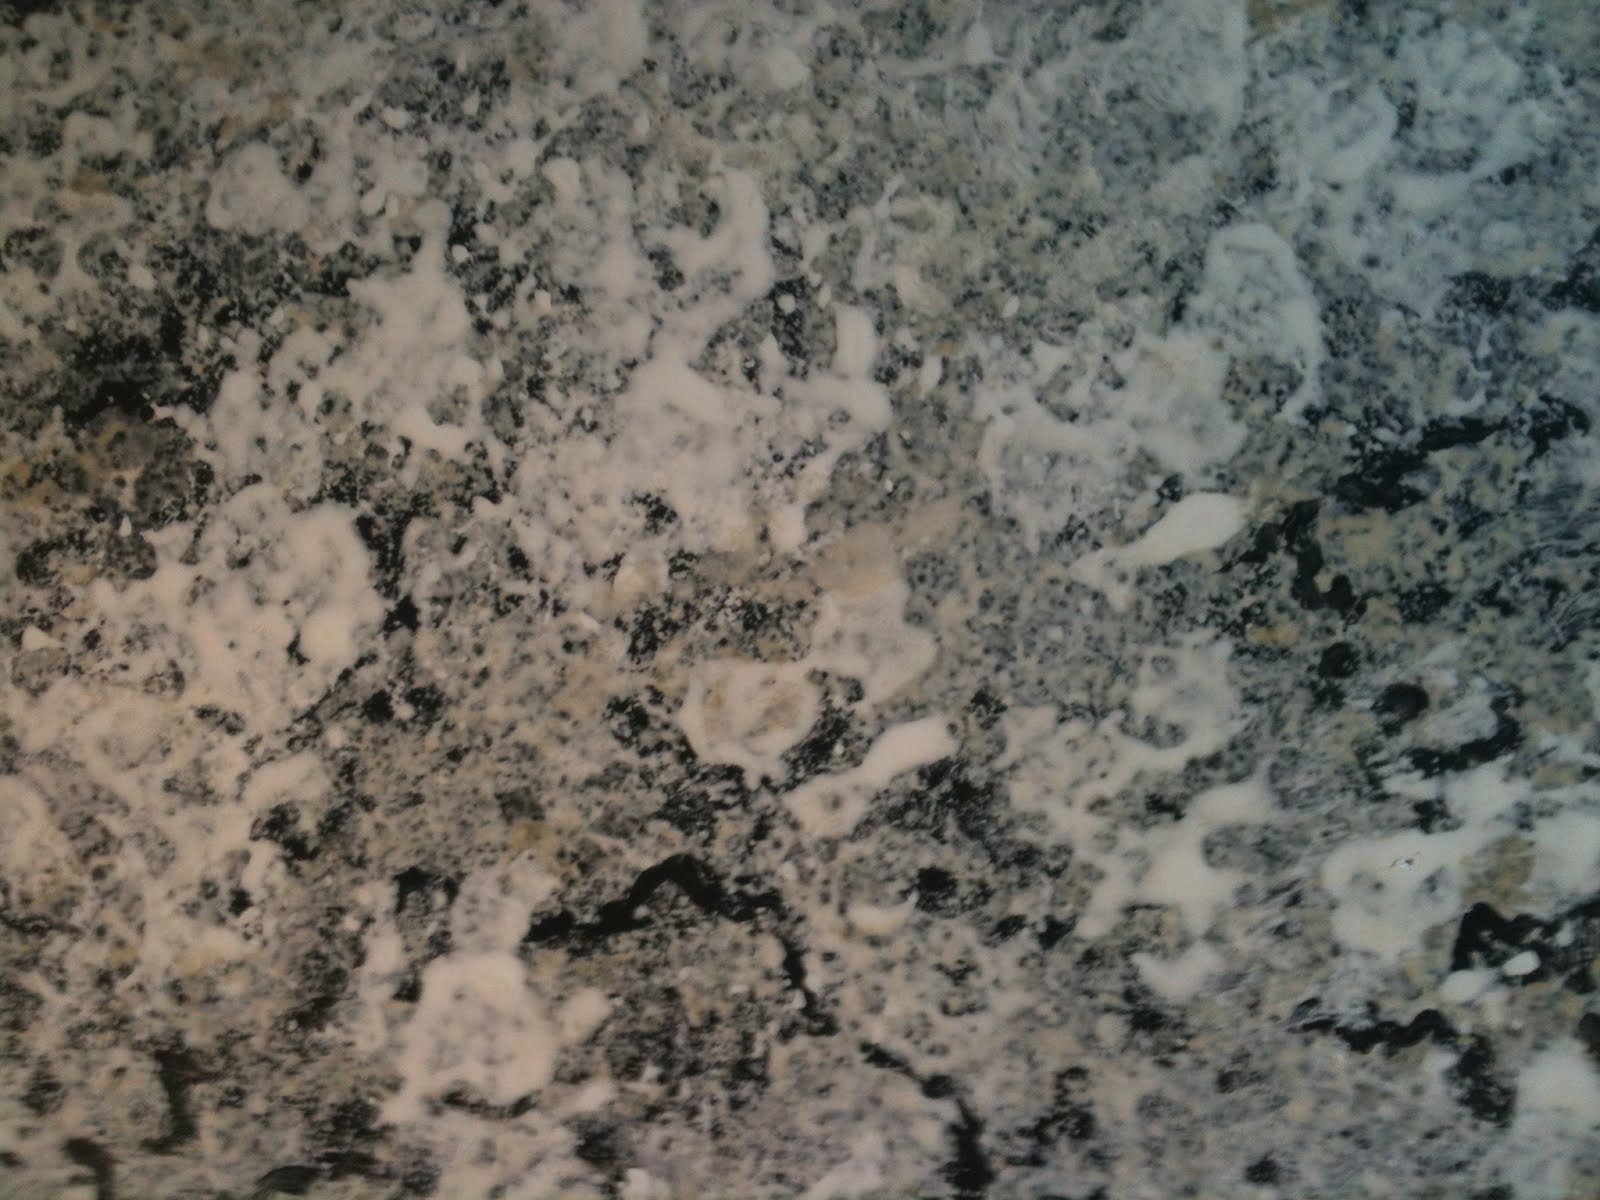 Taupe White Granite